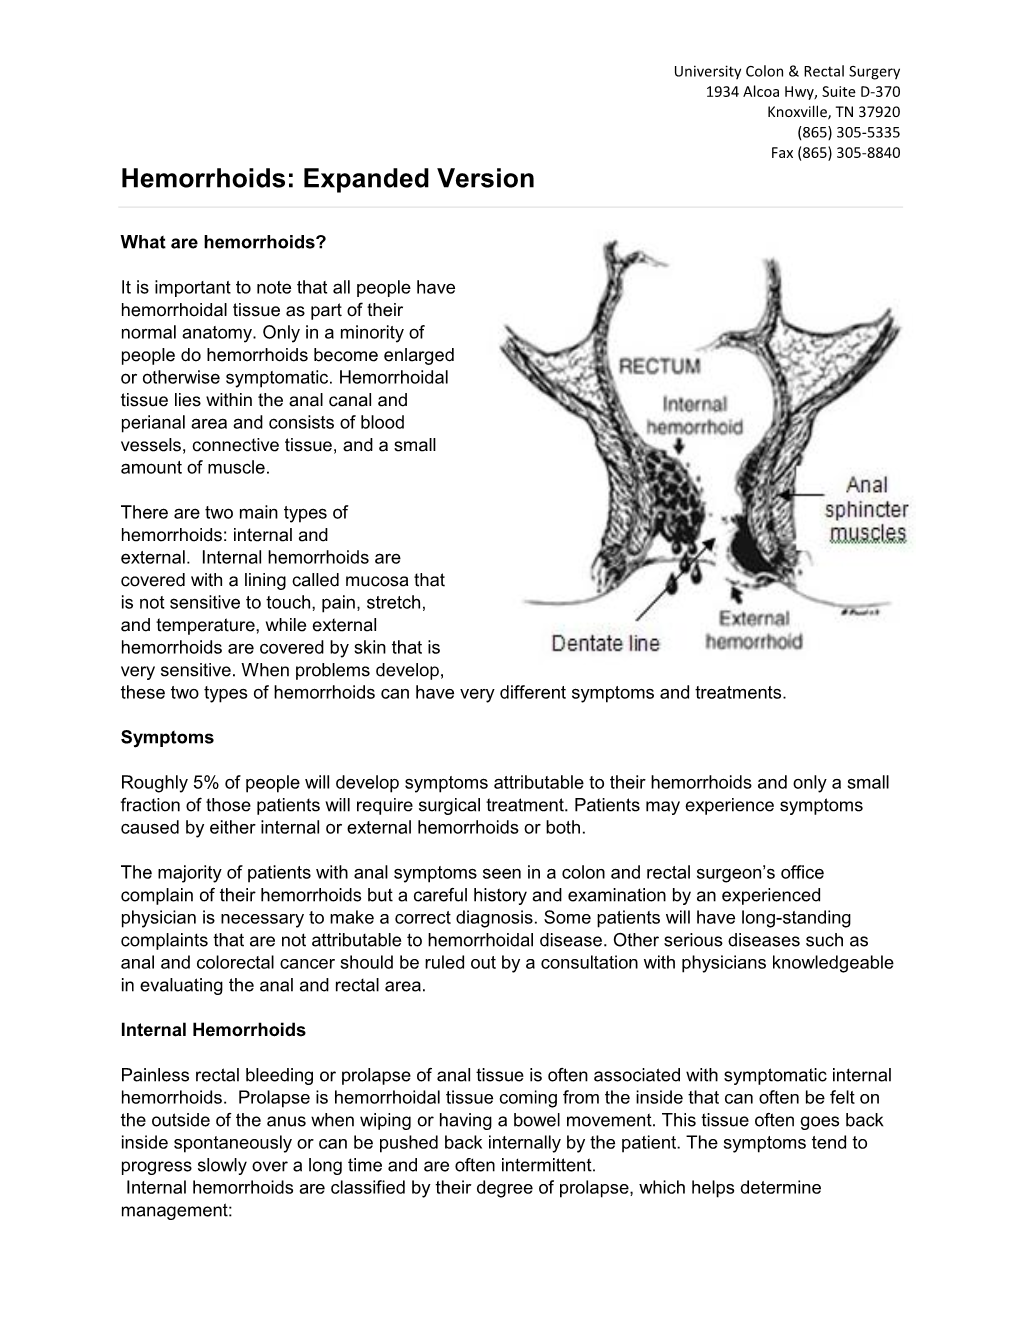 Hemorrhoids: Expanded Version